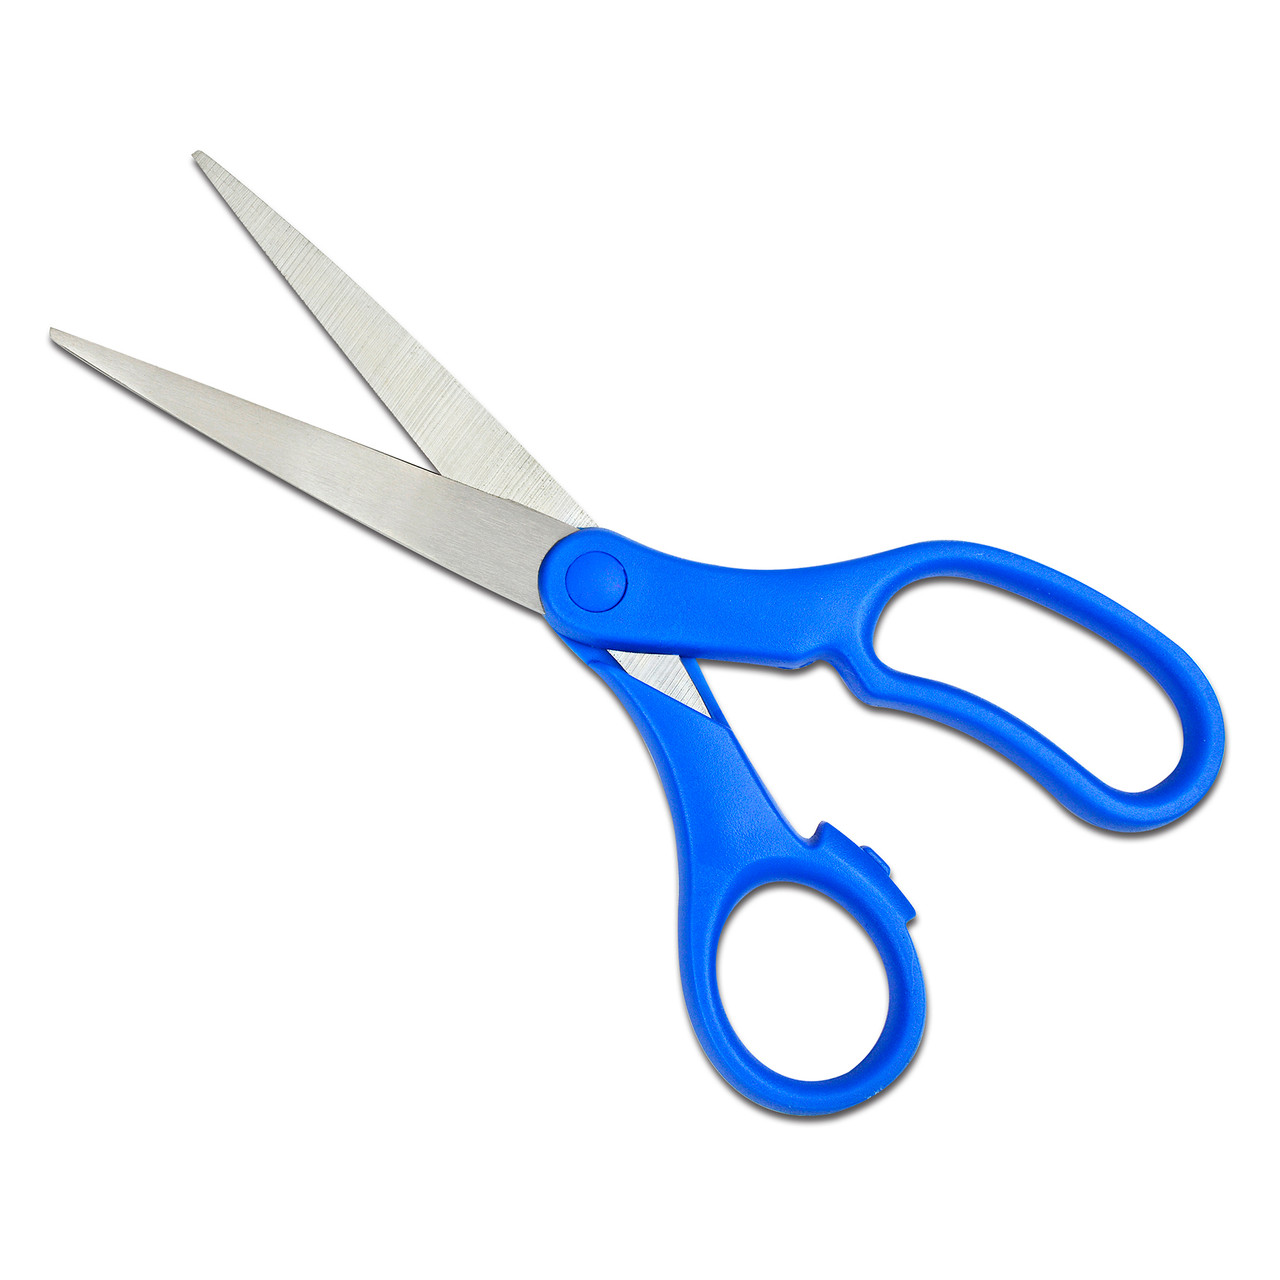 Scissors 8, Blue Handle, Pack of 6